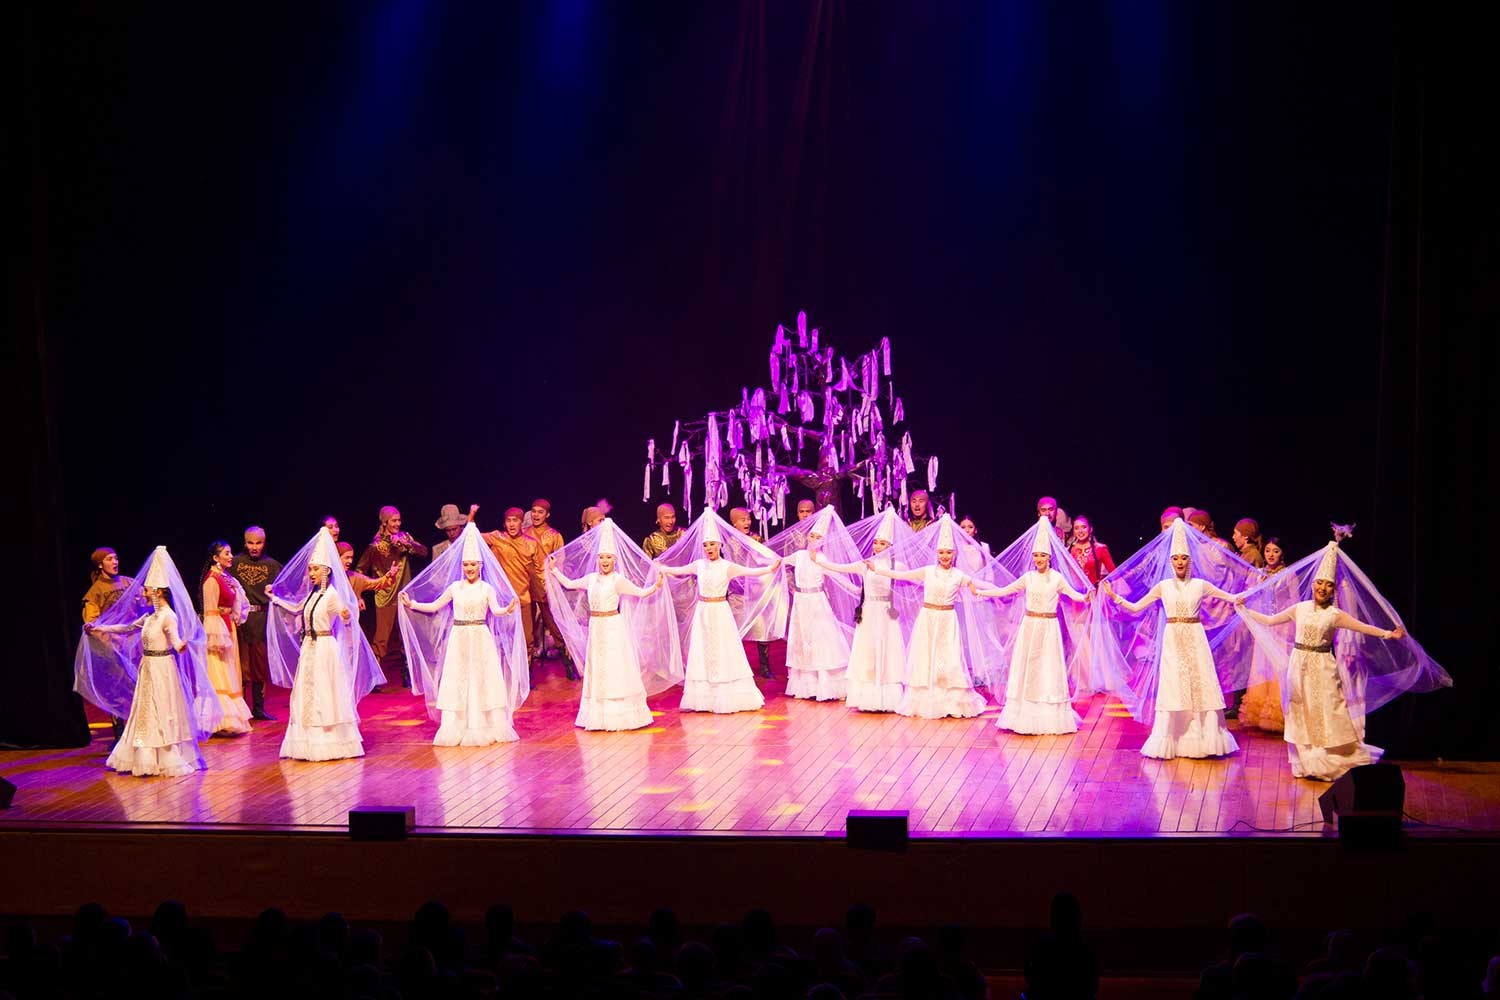 Astana Musical